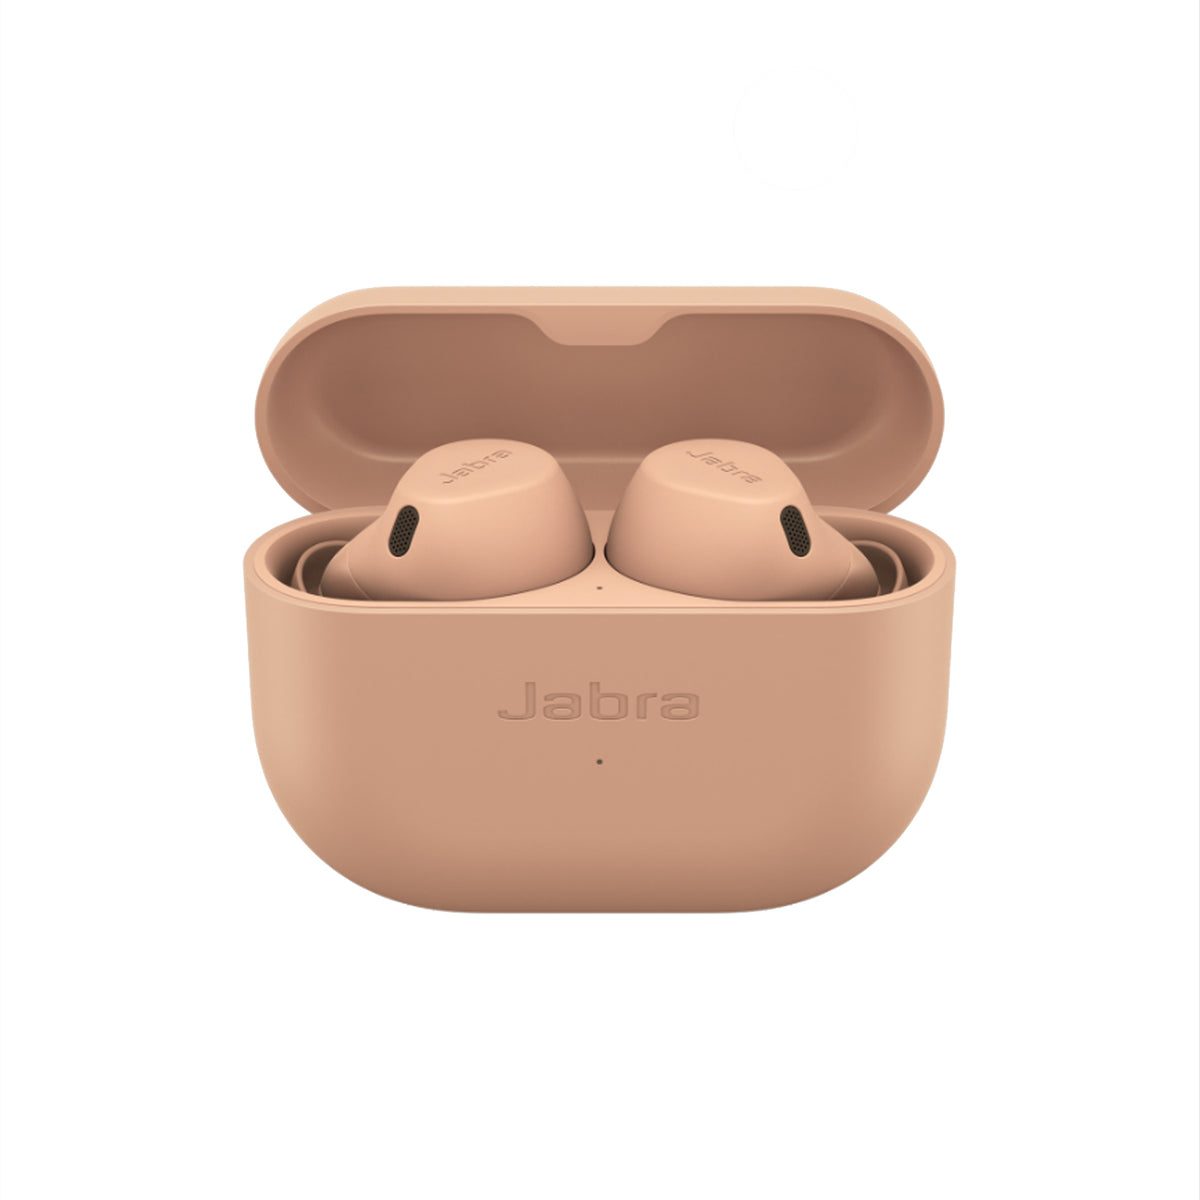 Jabra Elite 8 Active True Wireless Earbuds